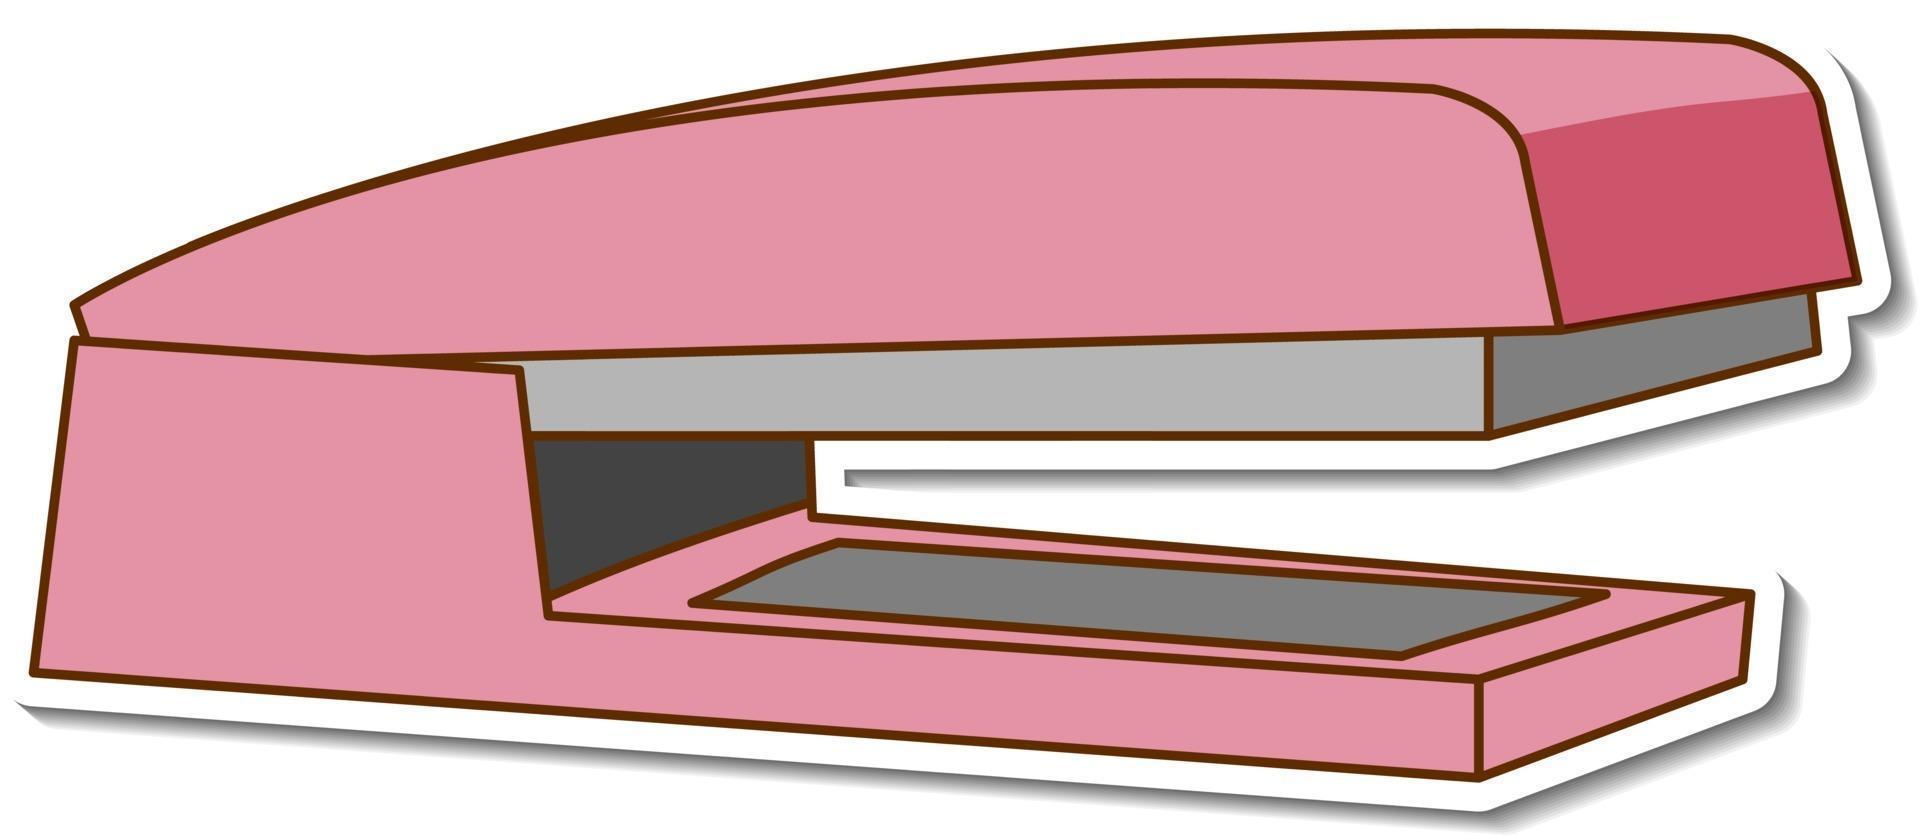 Pink stapler sticker on white background vector